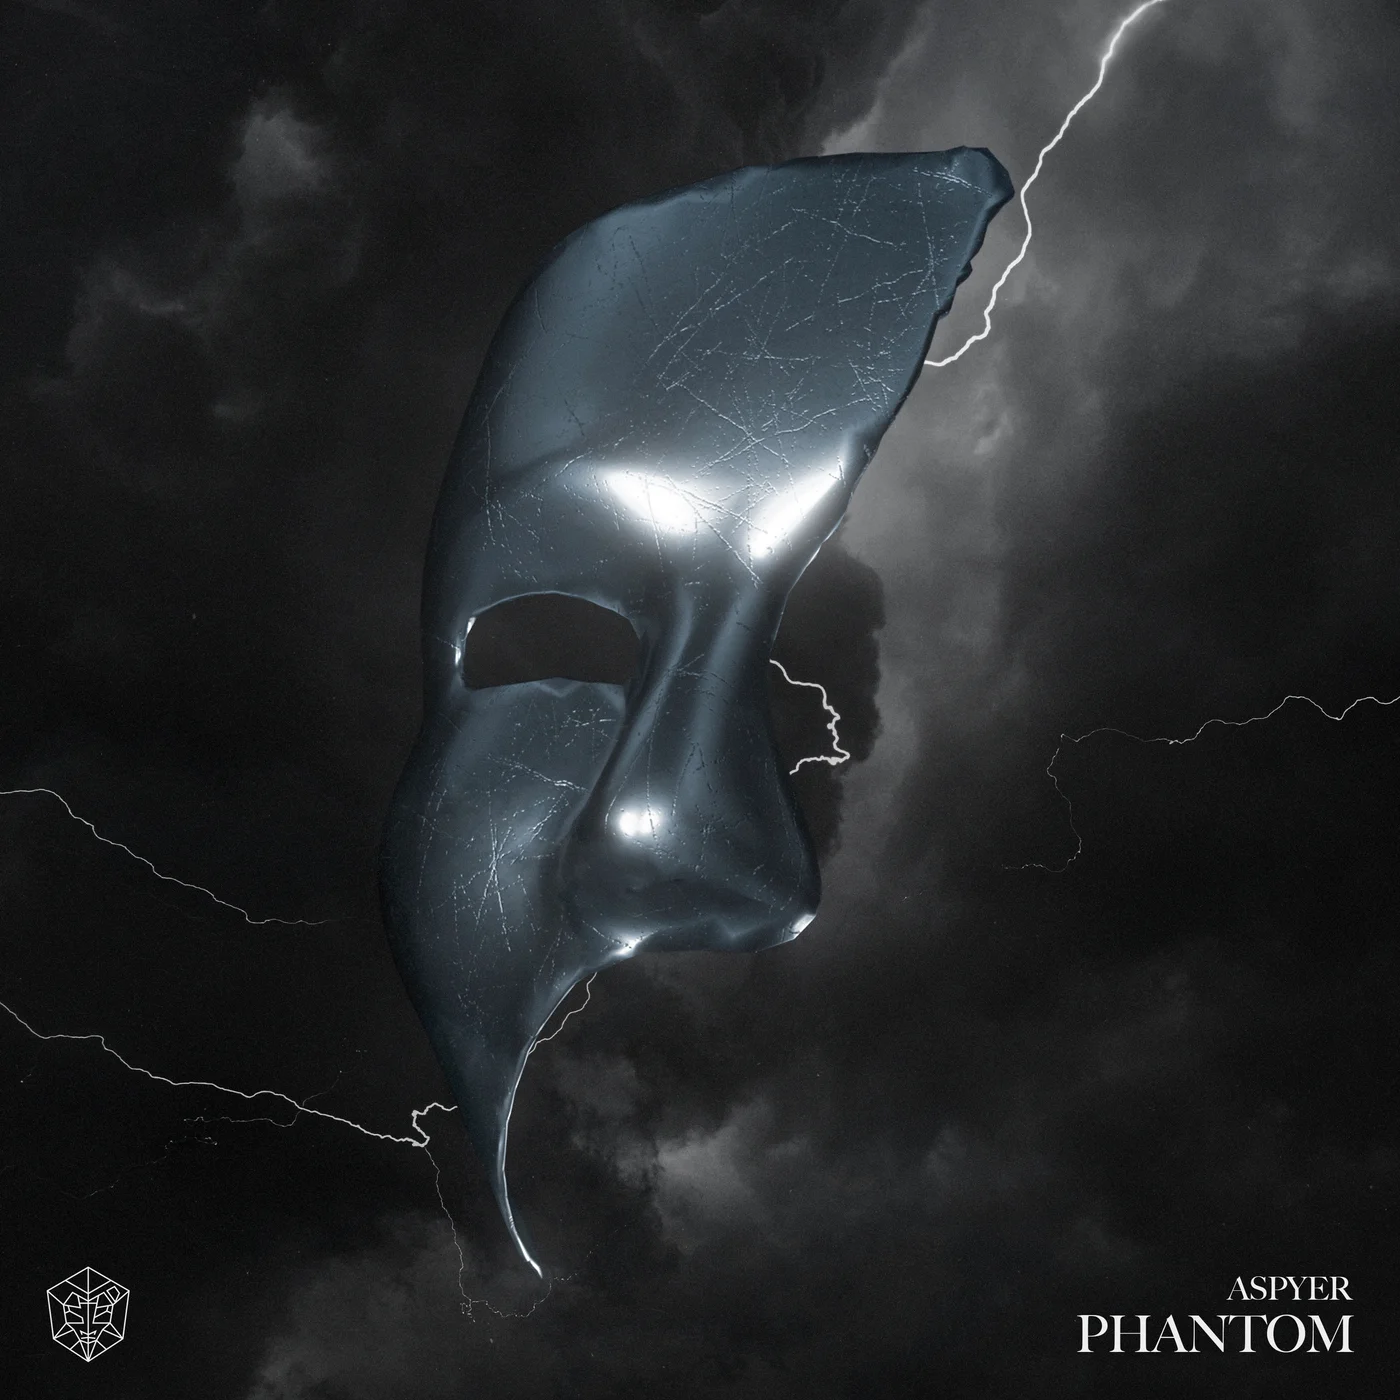 Aspyer Phantom cover artwork